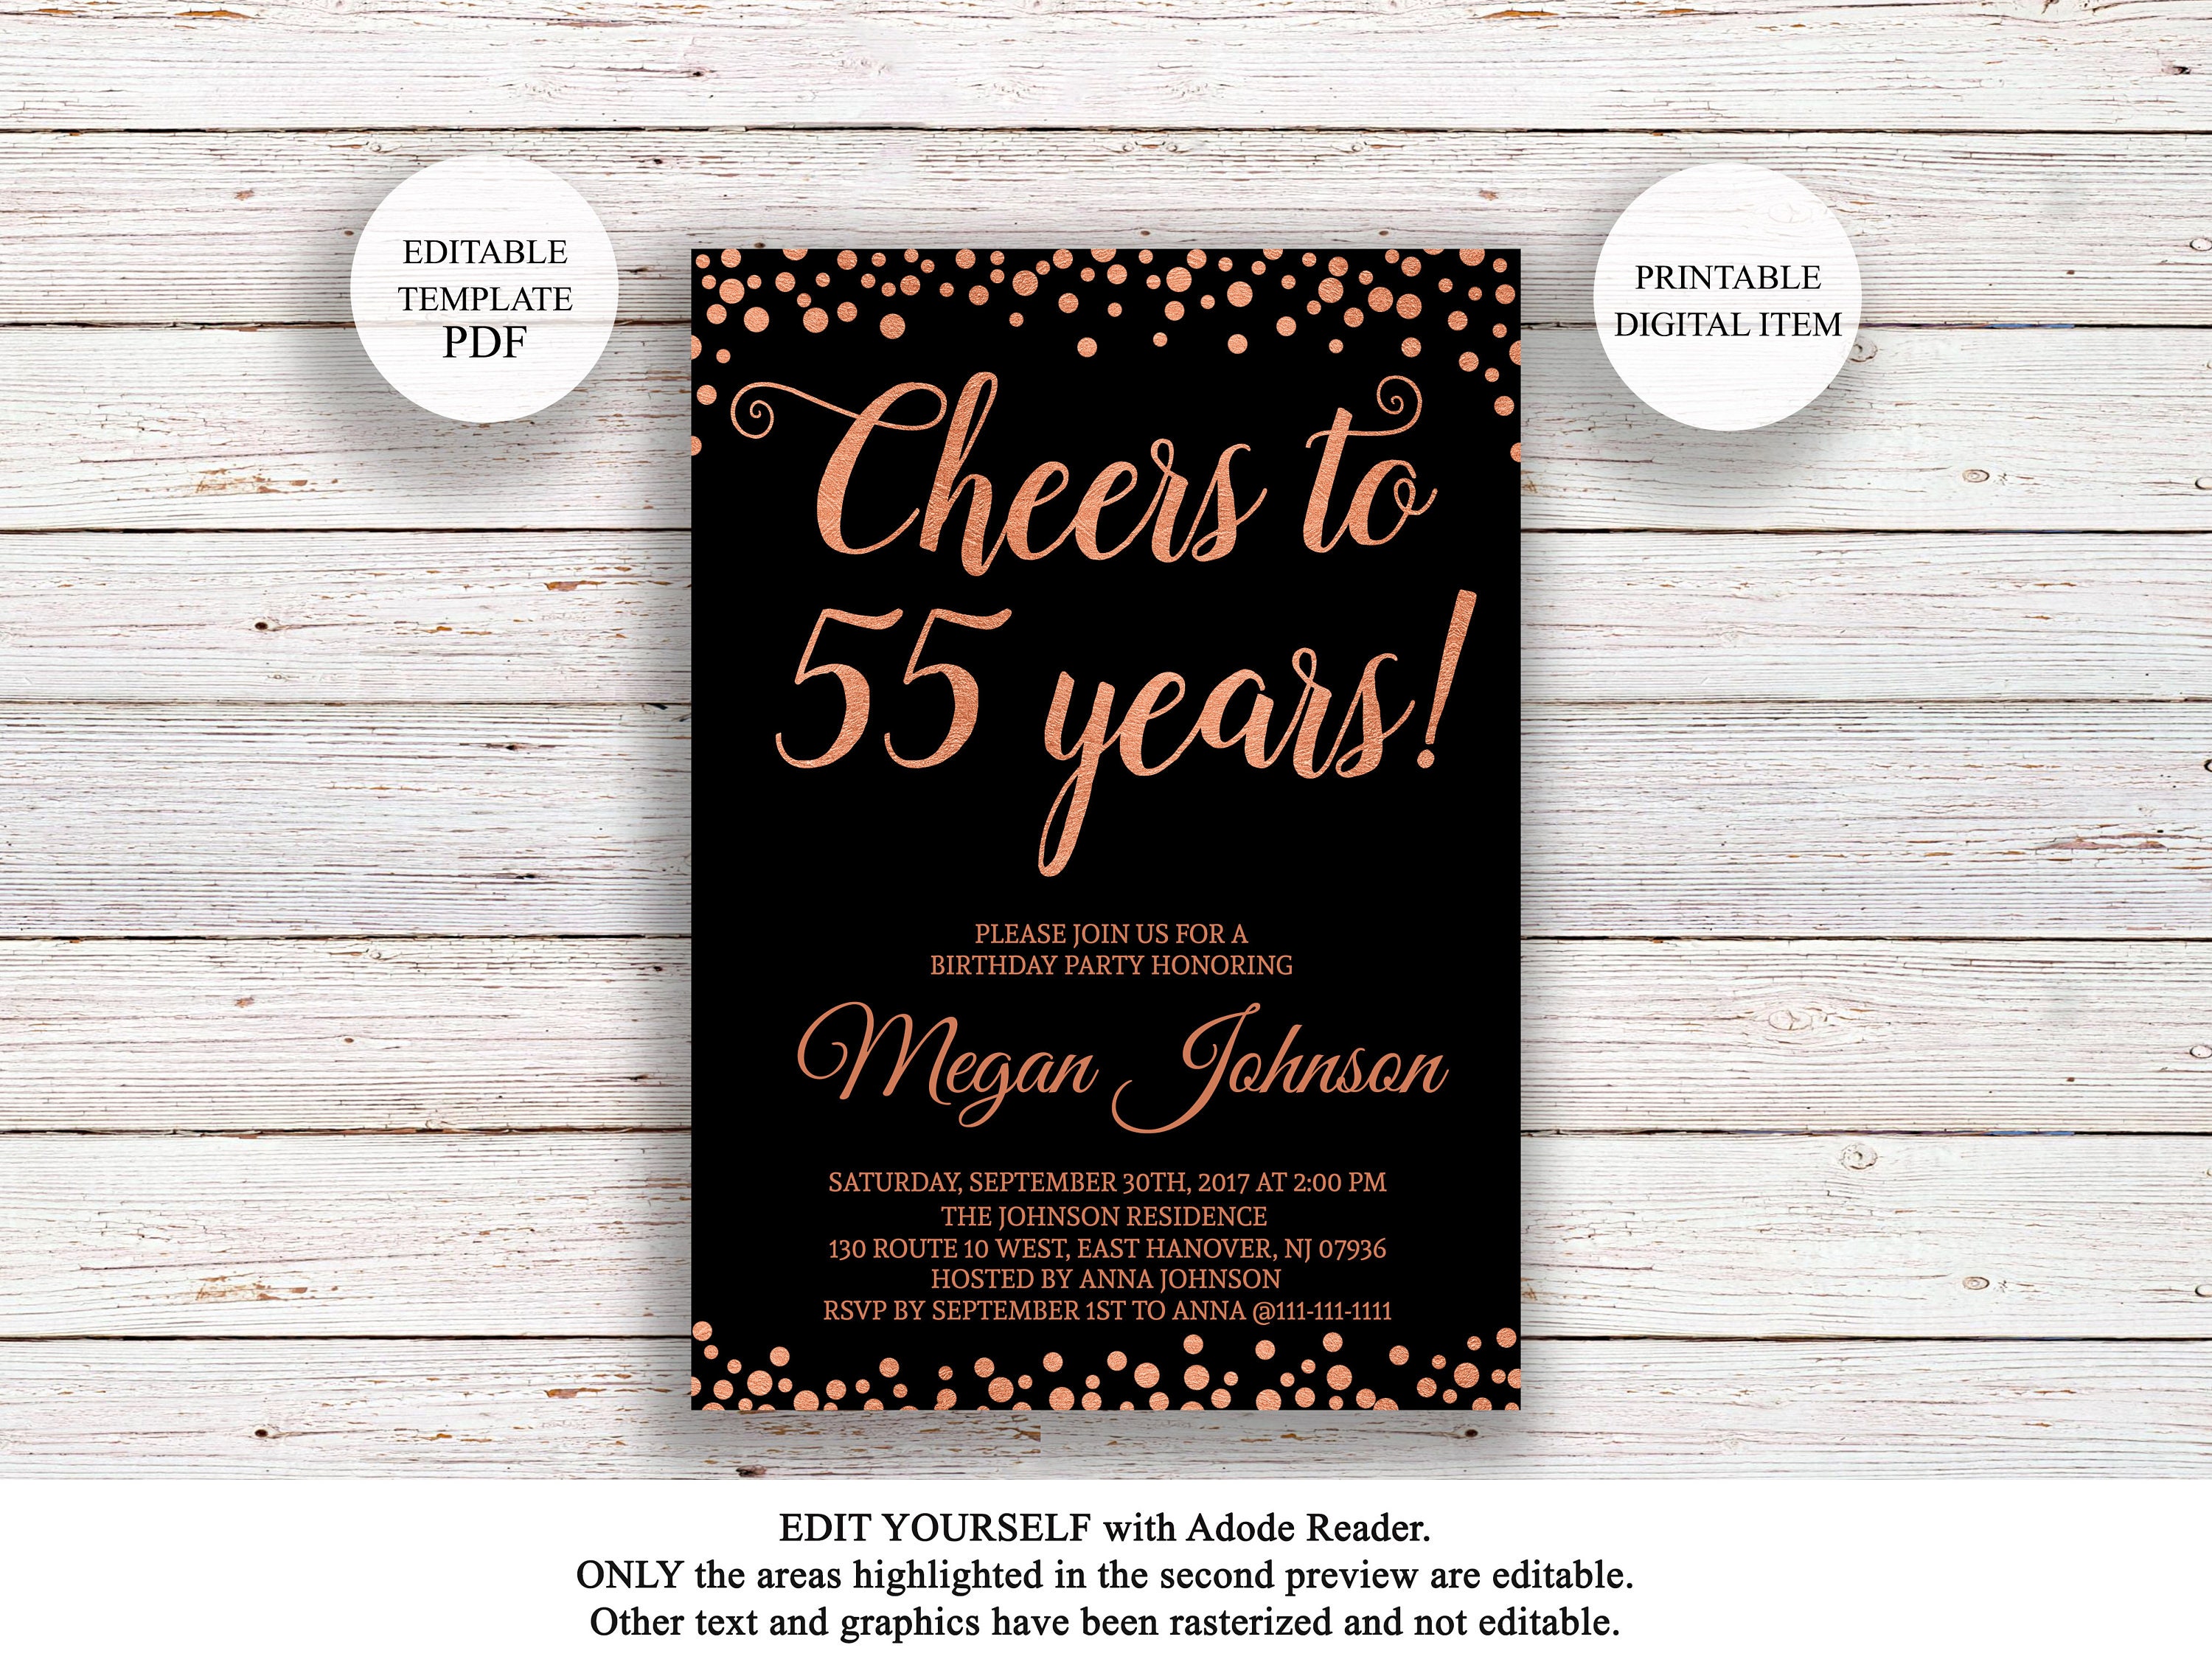 Editable 55th Birthday Invitation Cheers to 55 Years Black | Etsy